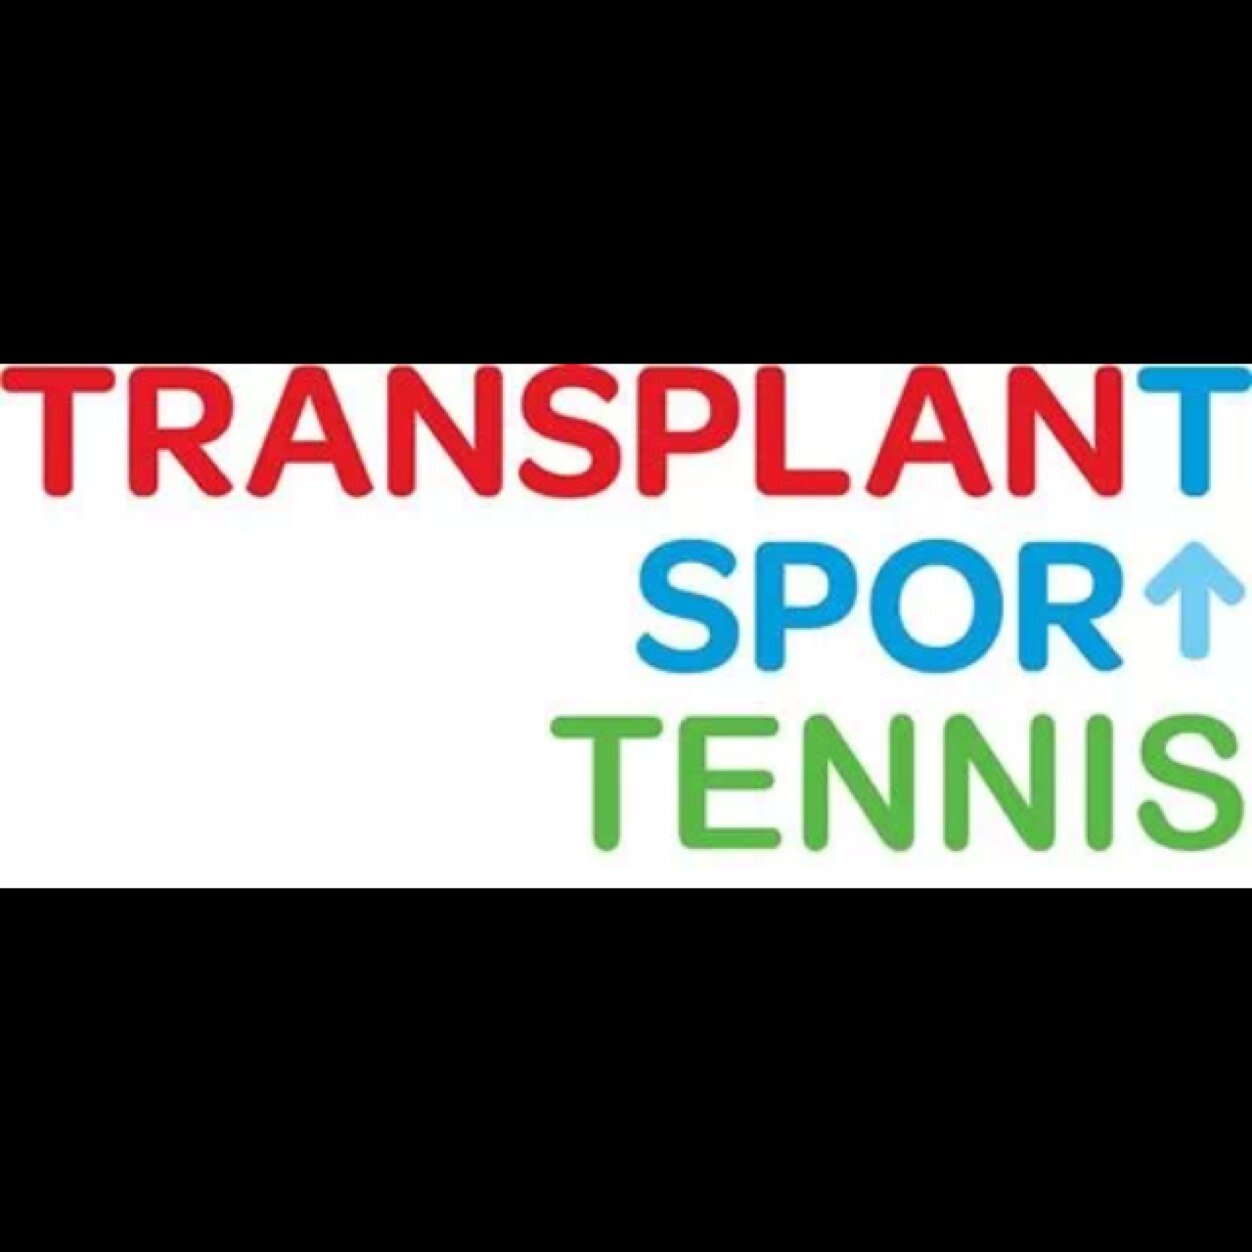 Transplant Sport Tennis - Game , Set and The Gift Of Life! Promoting organ donation & transplantation through playing tennis.